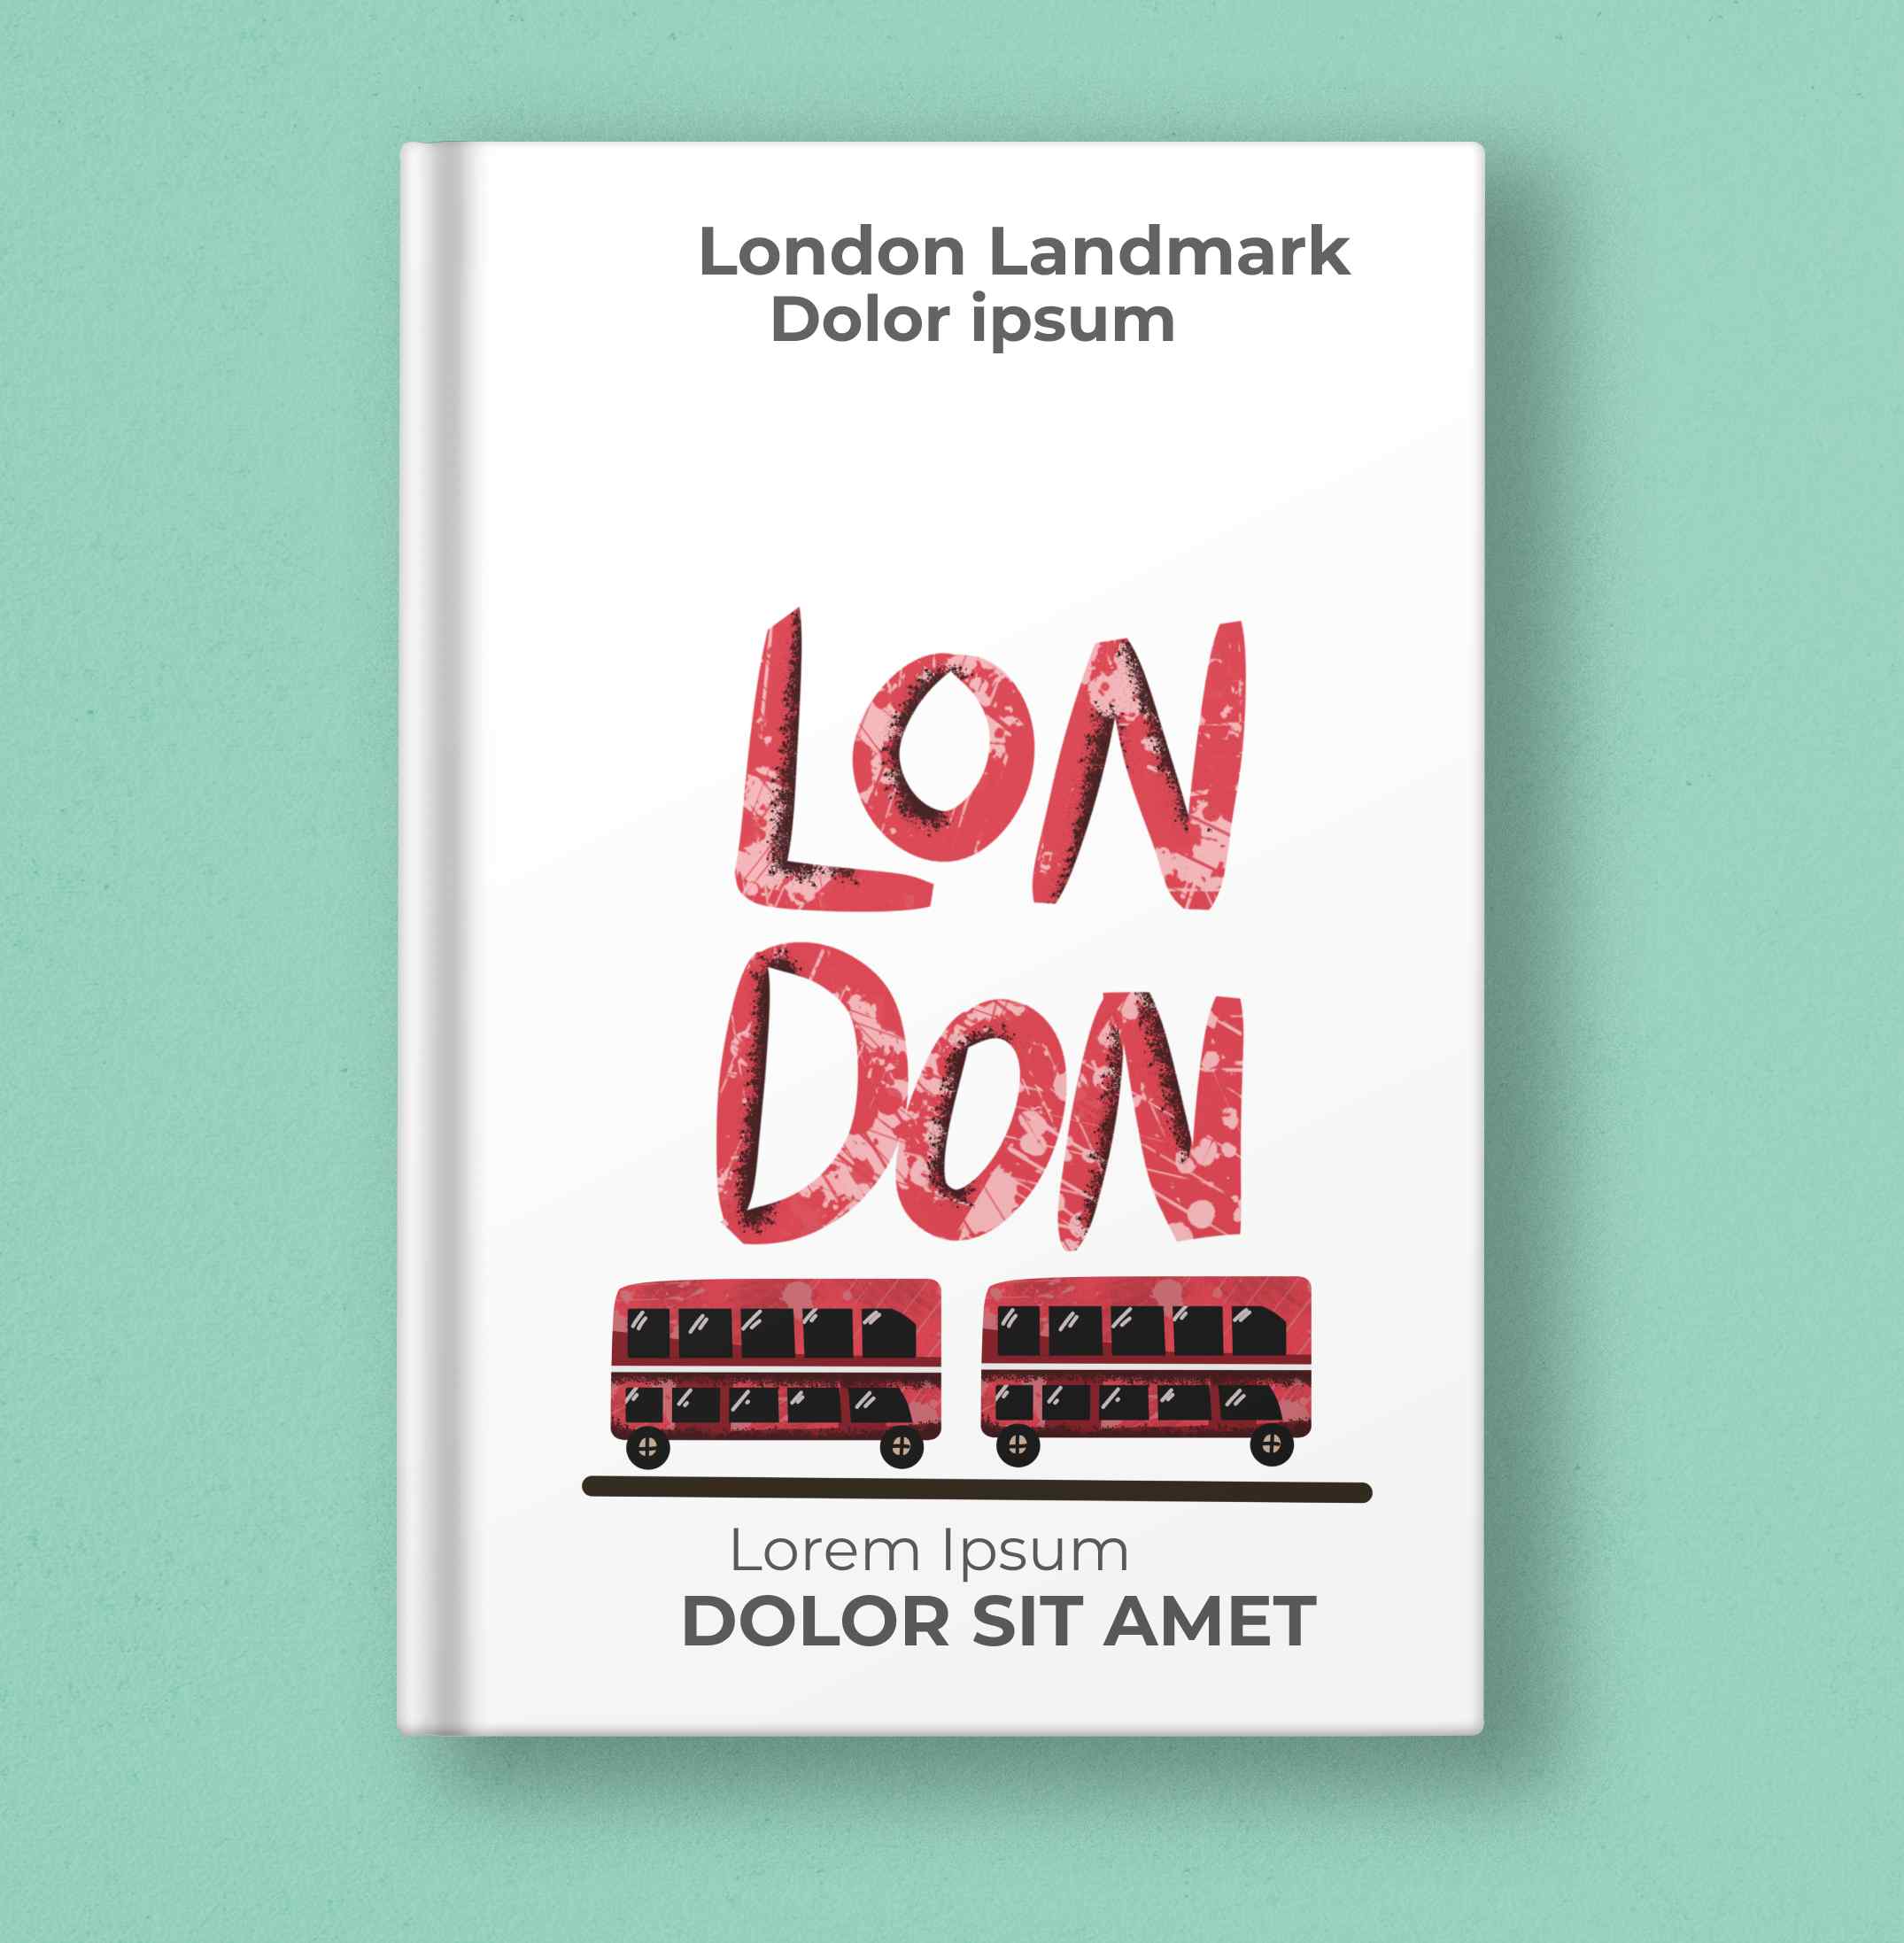 London Landmark Illustrations, book cover moc.kup